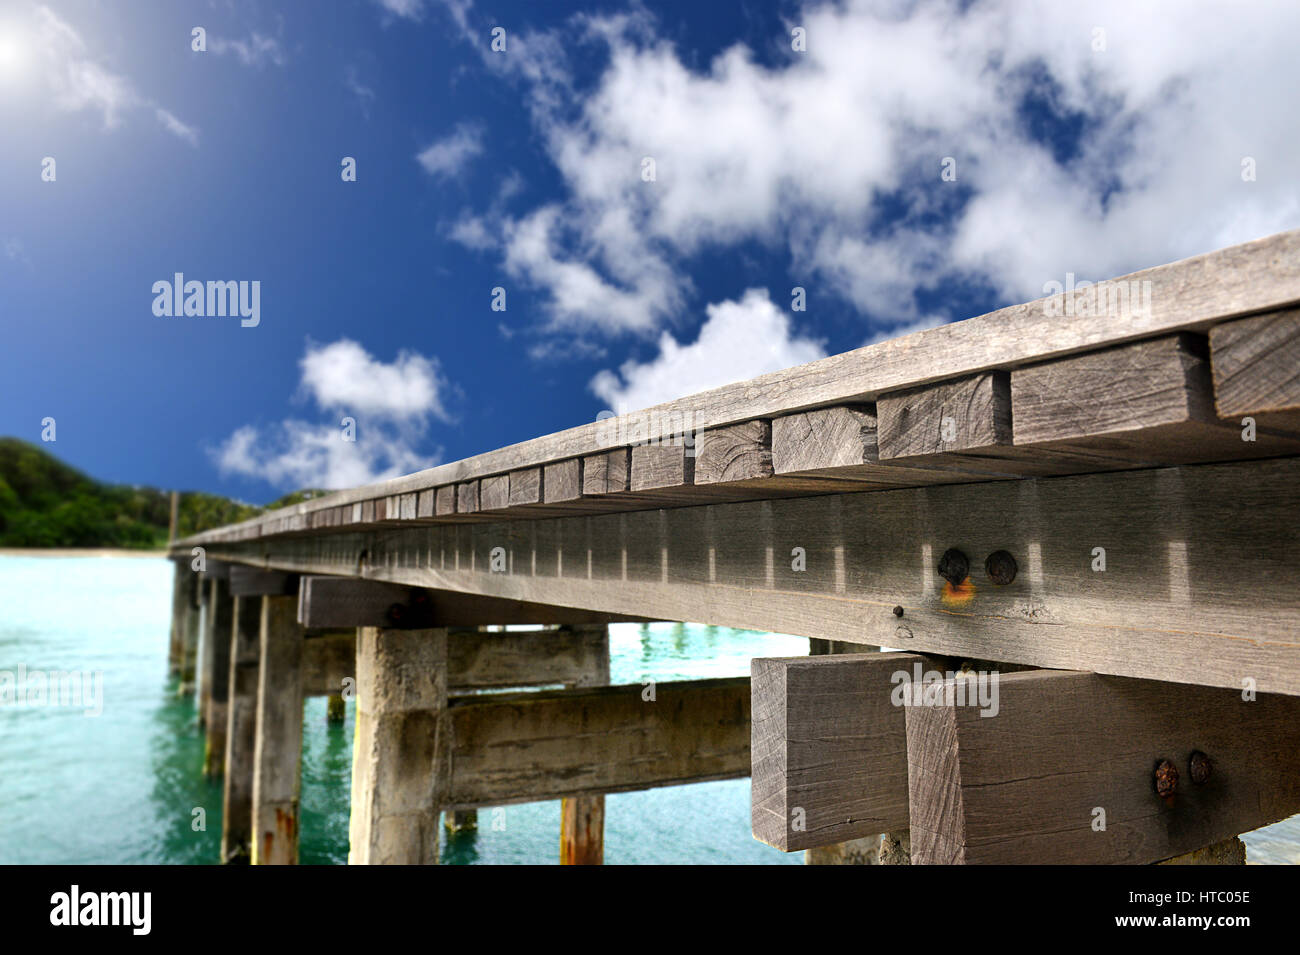 The  wooden bridge in island bay  photo in sunny day lighting Stock Photo